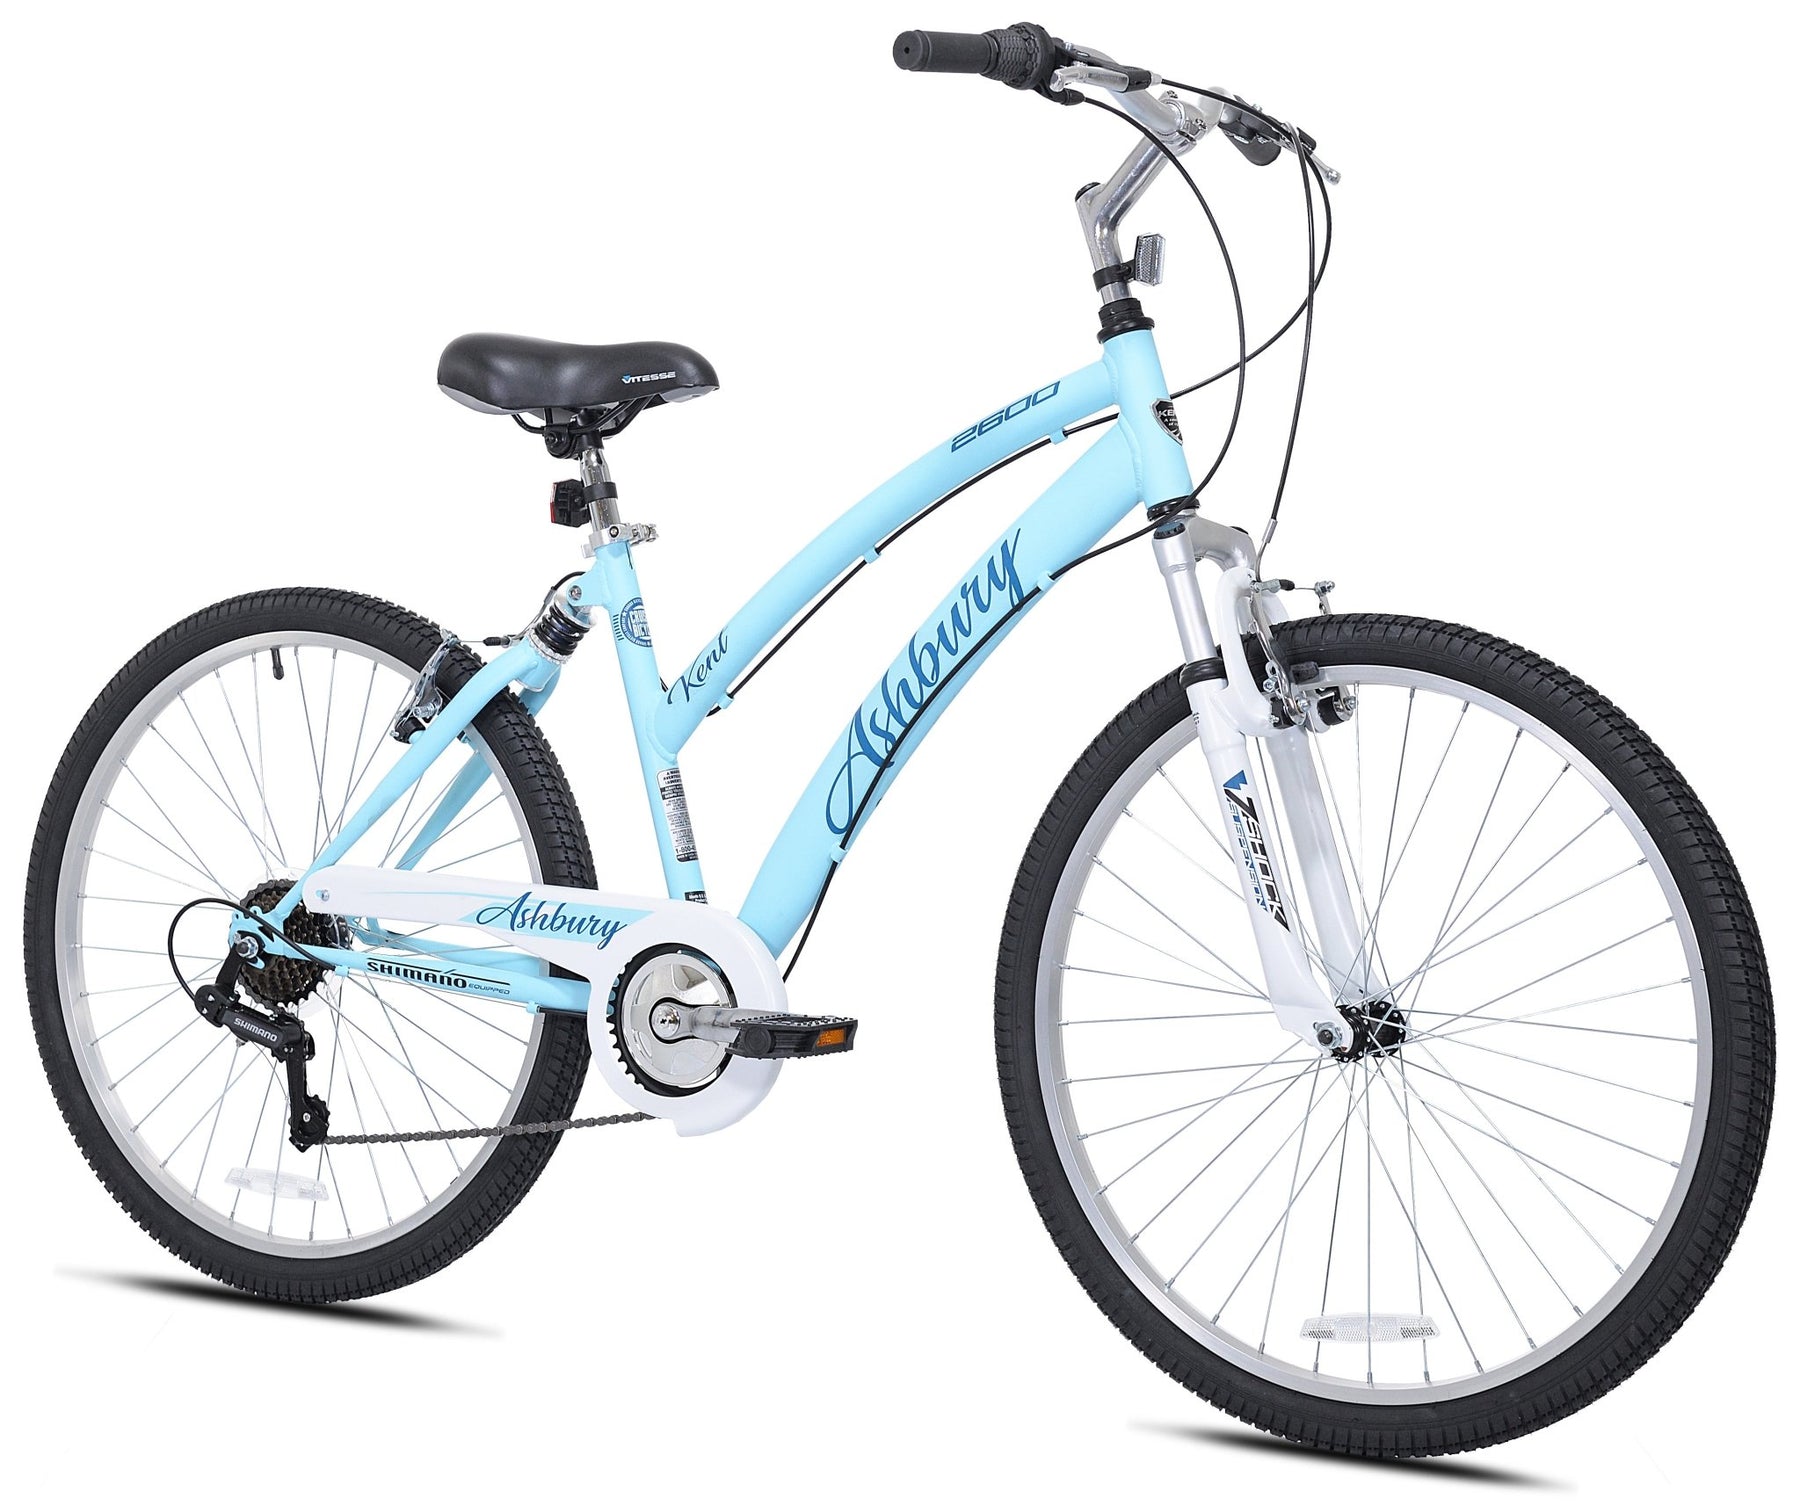 26" Kent Ashbury | Women's Hybrid Comfort Bike for Ages 13+